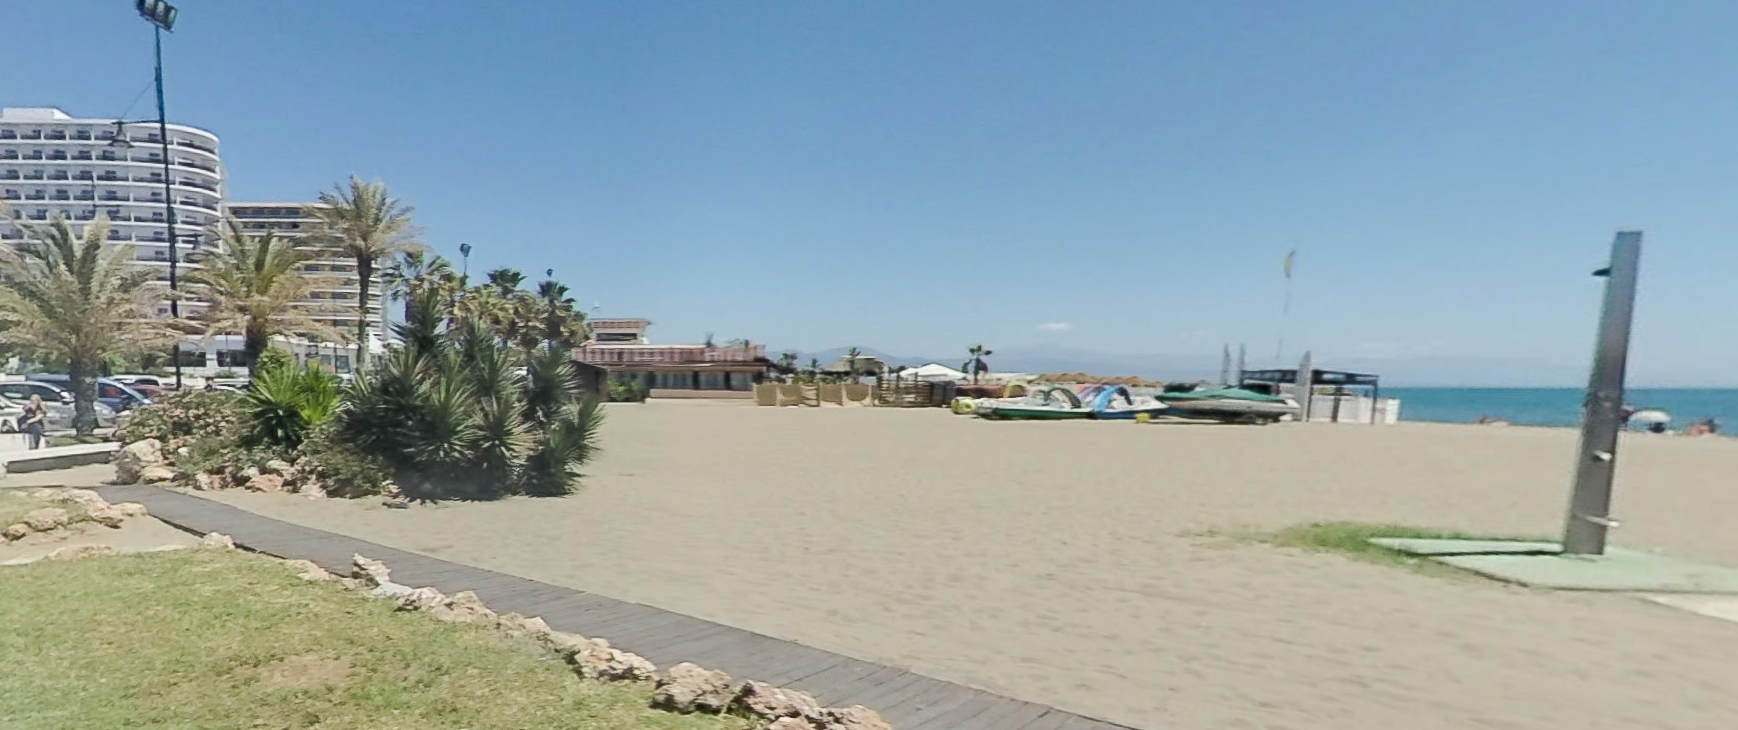 Playa de los Álamos by Google Earth